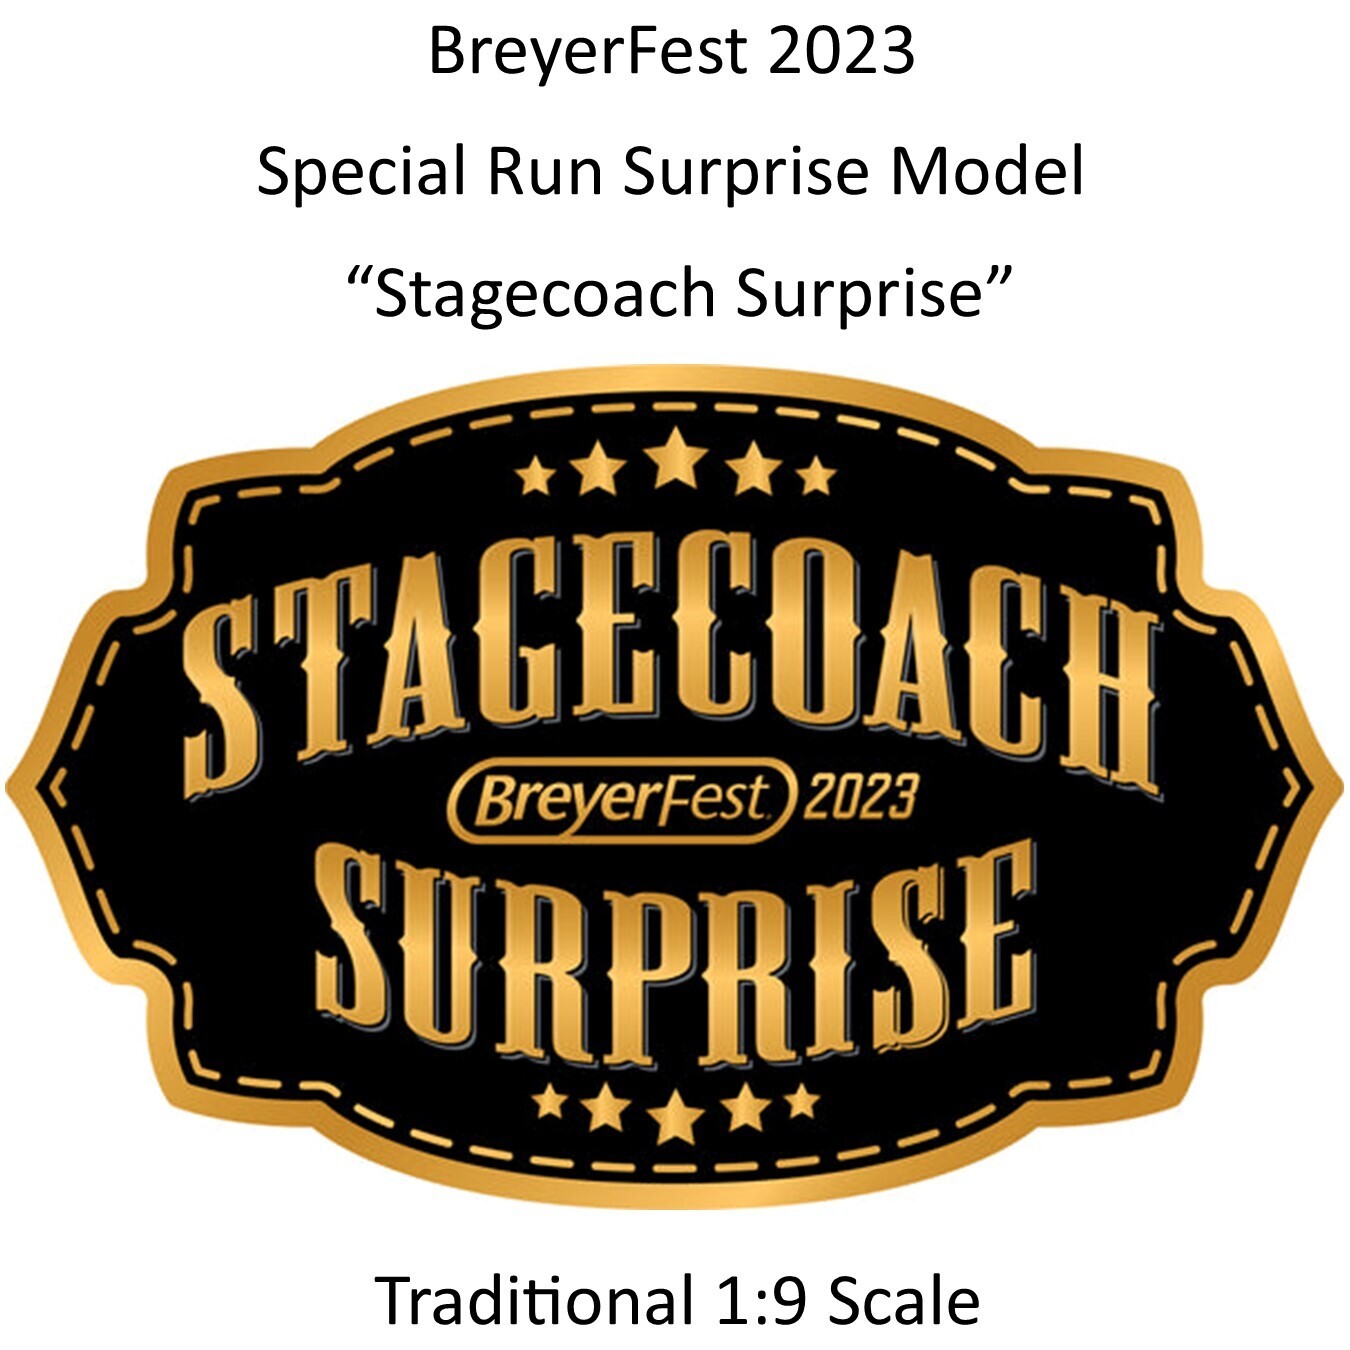 BF 2023 Special Run Surprise Model "Stagecoach Surprise" LE Pre-Order